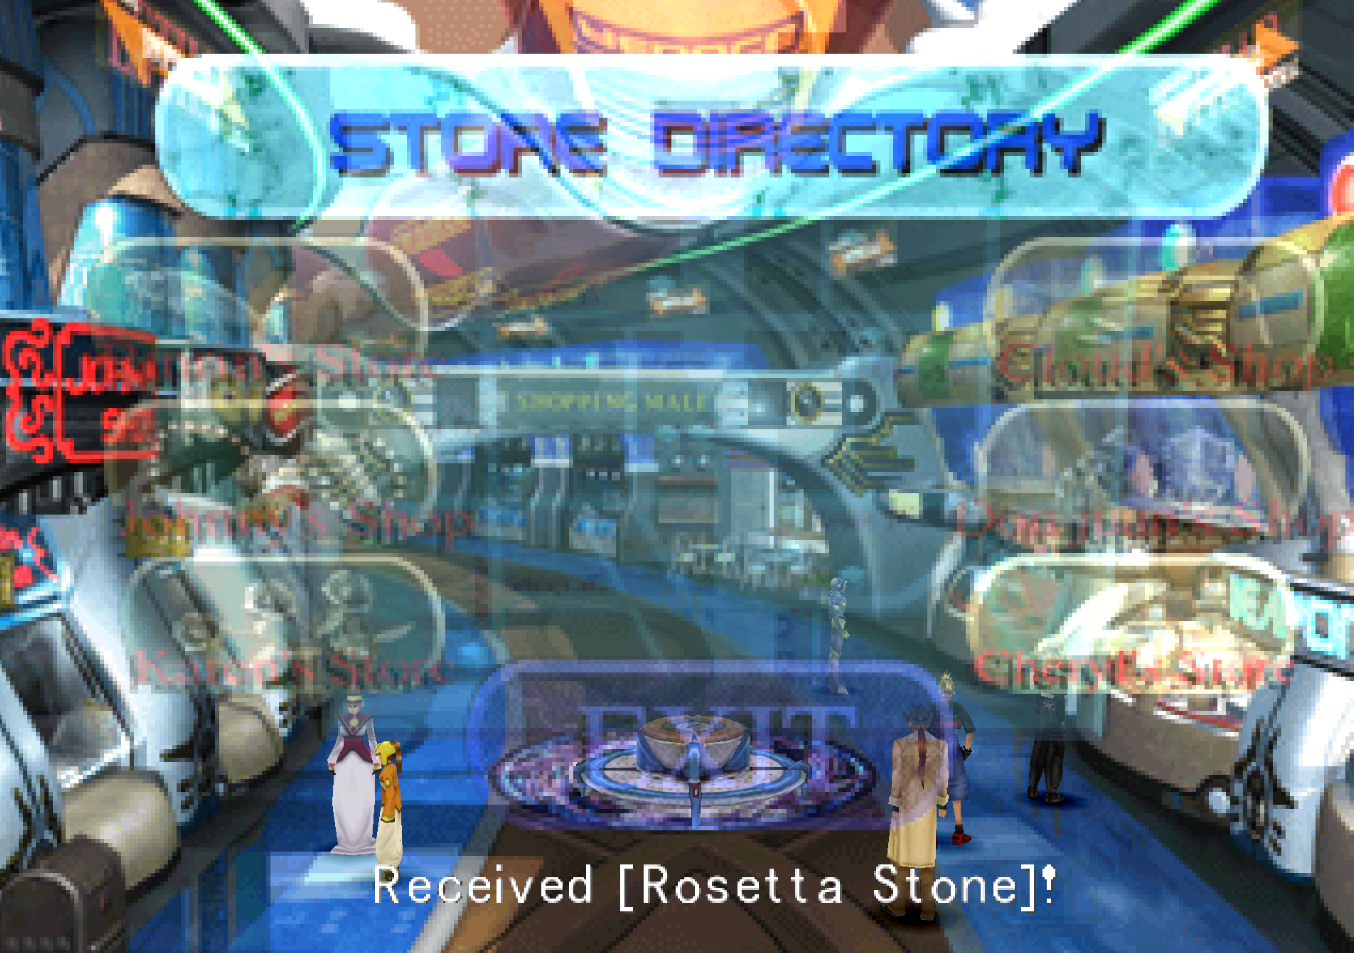 Received Rosetta Stone